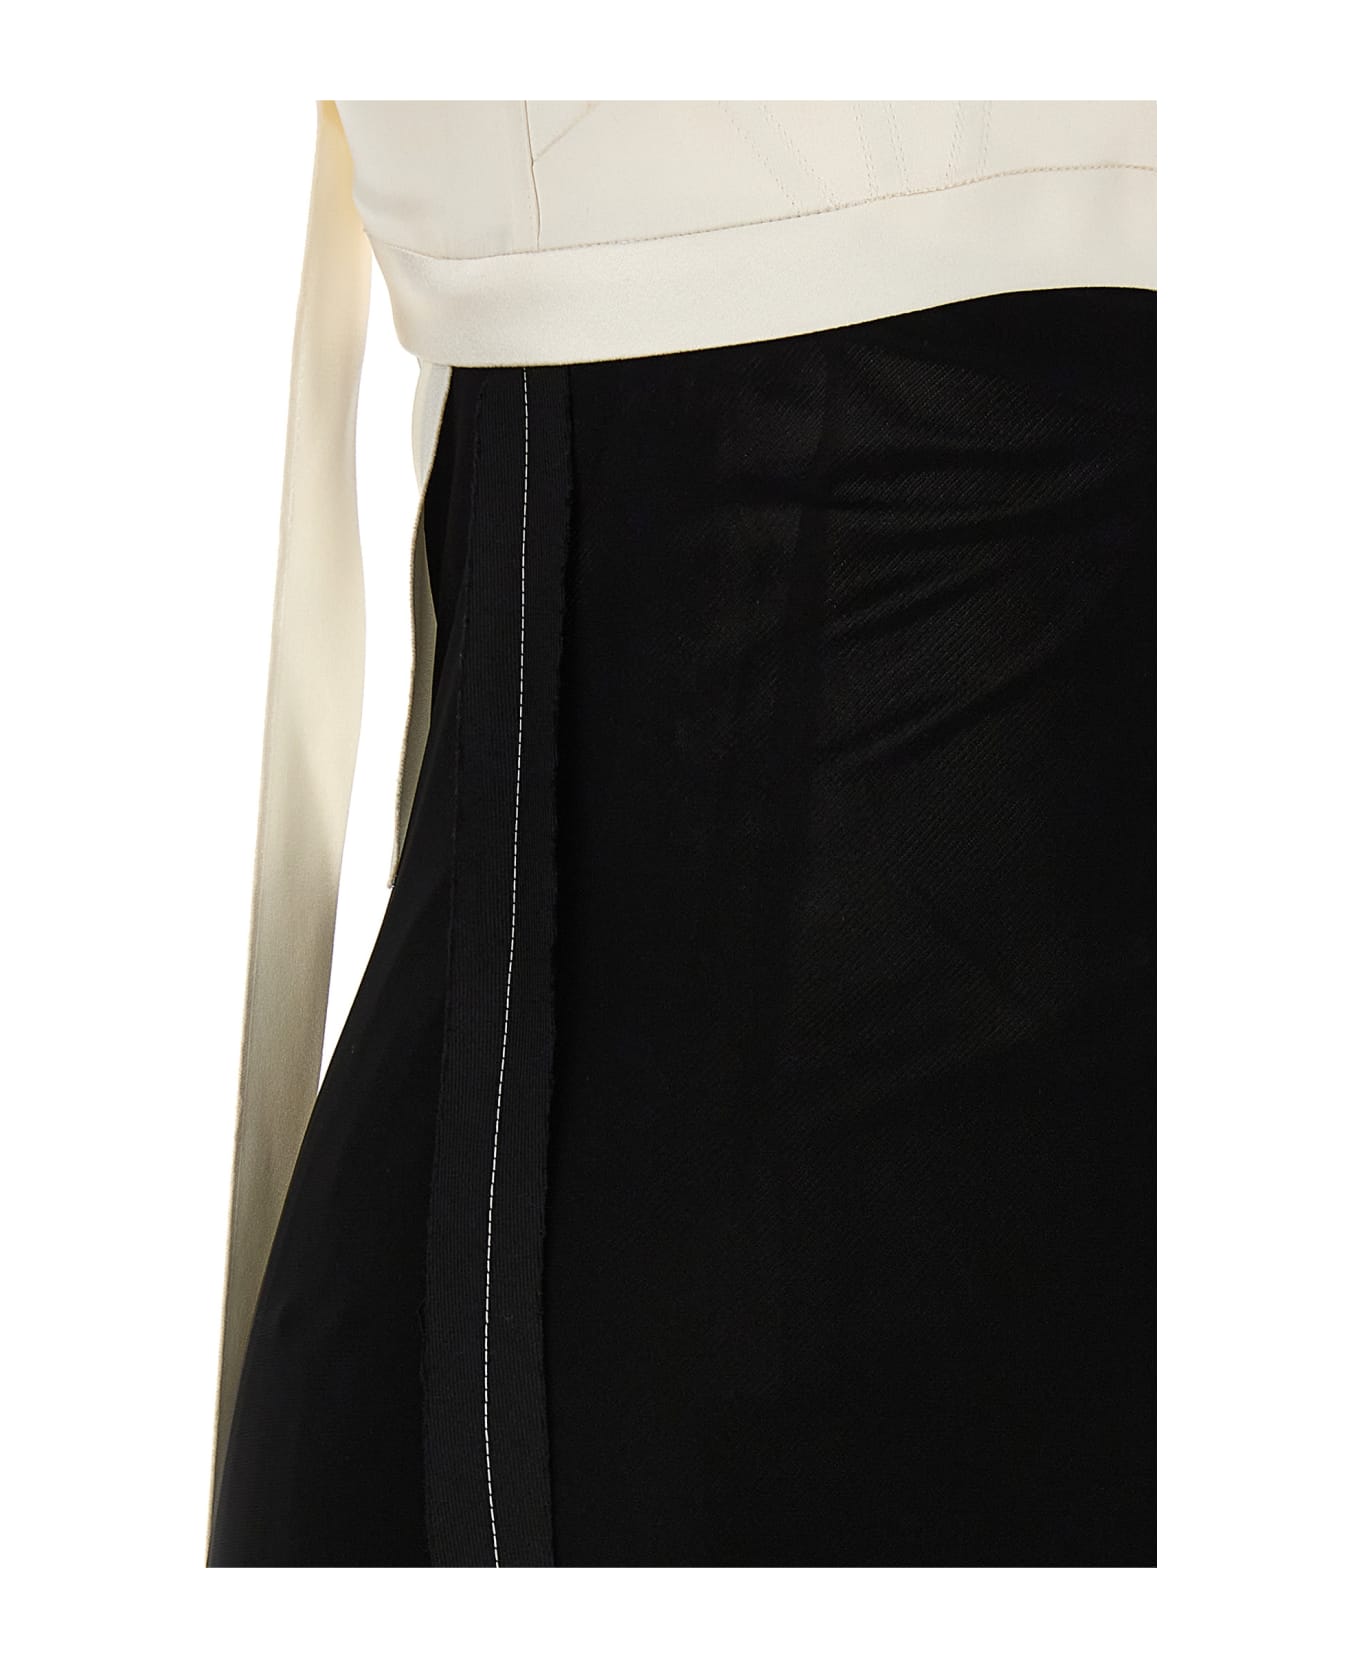 Victoria Beckham Bra Detail Dress - White/Black